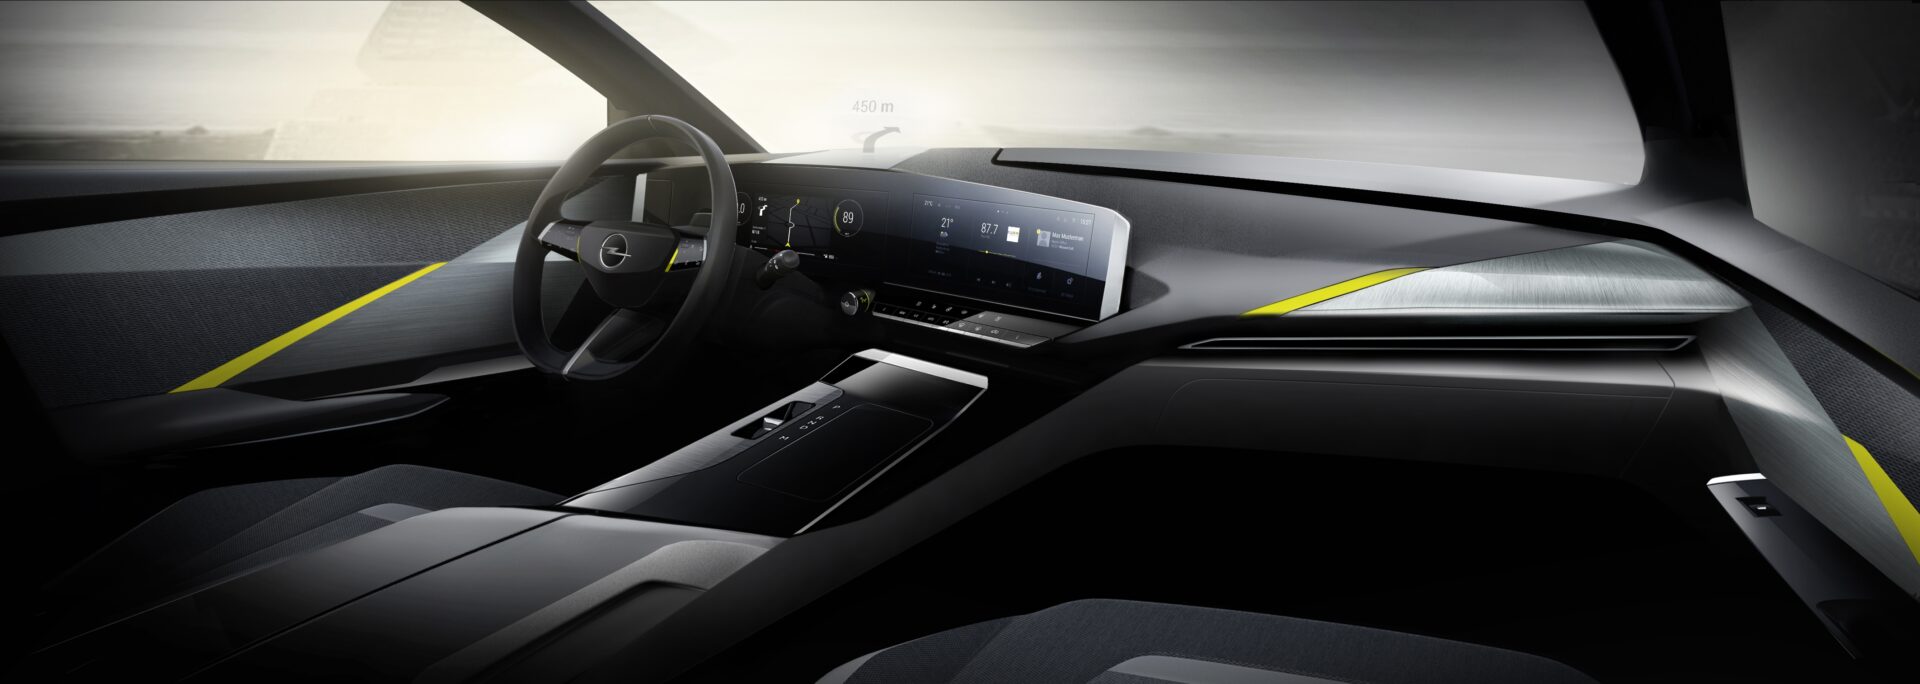 Nuova Opel Astra Pure Panel